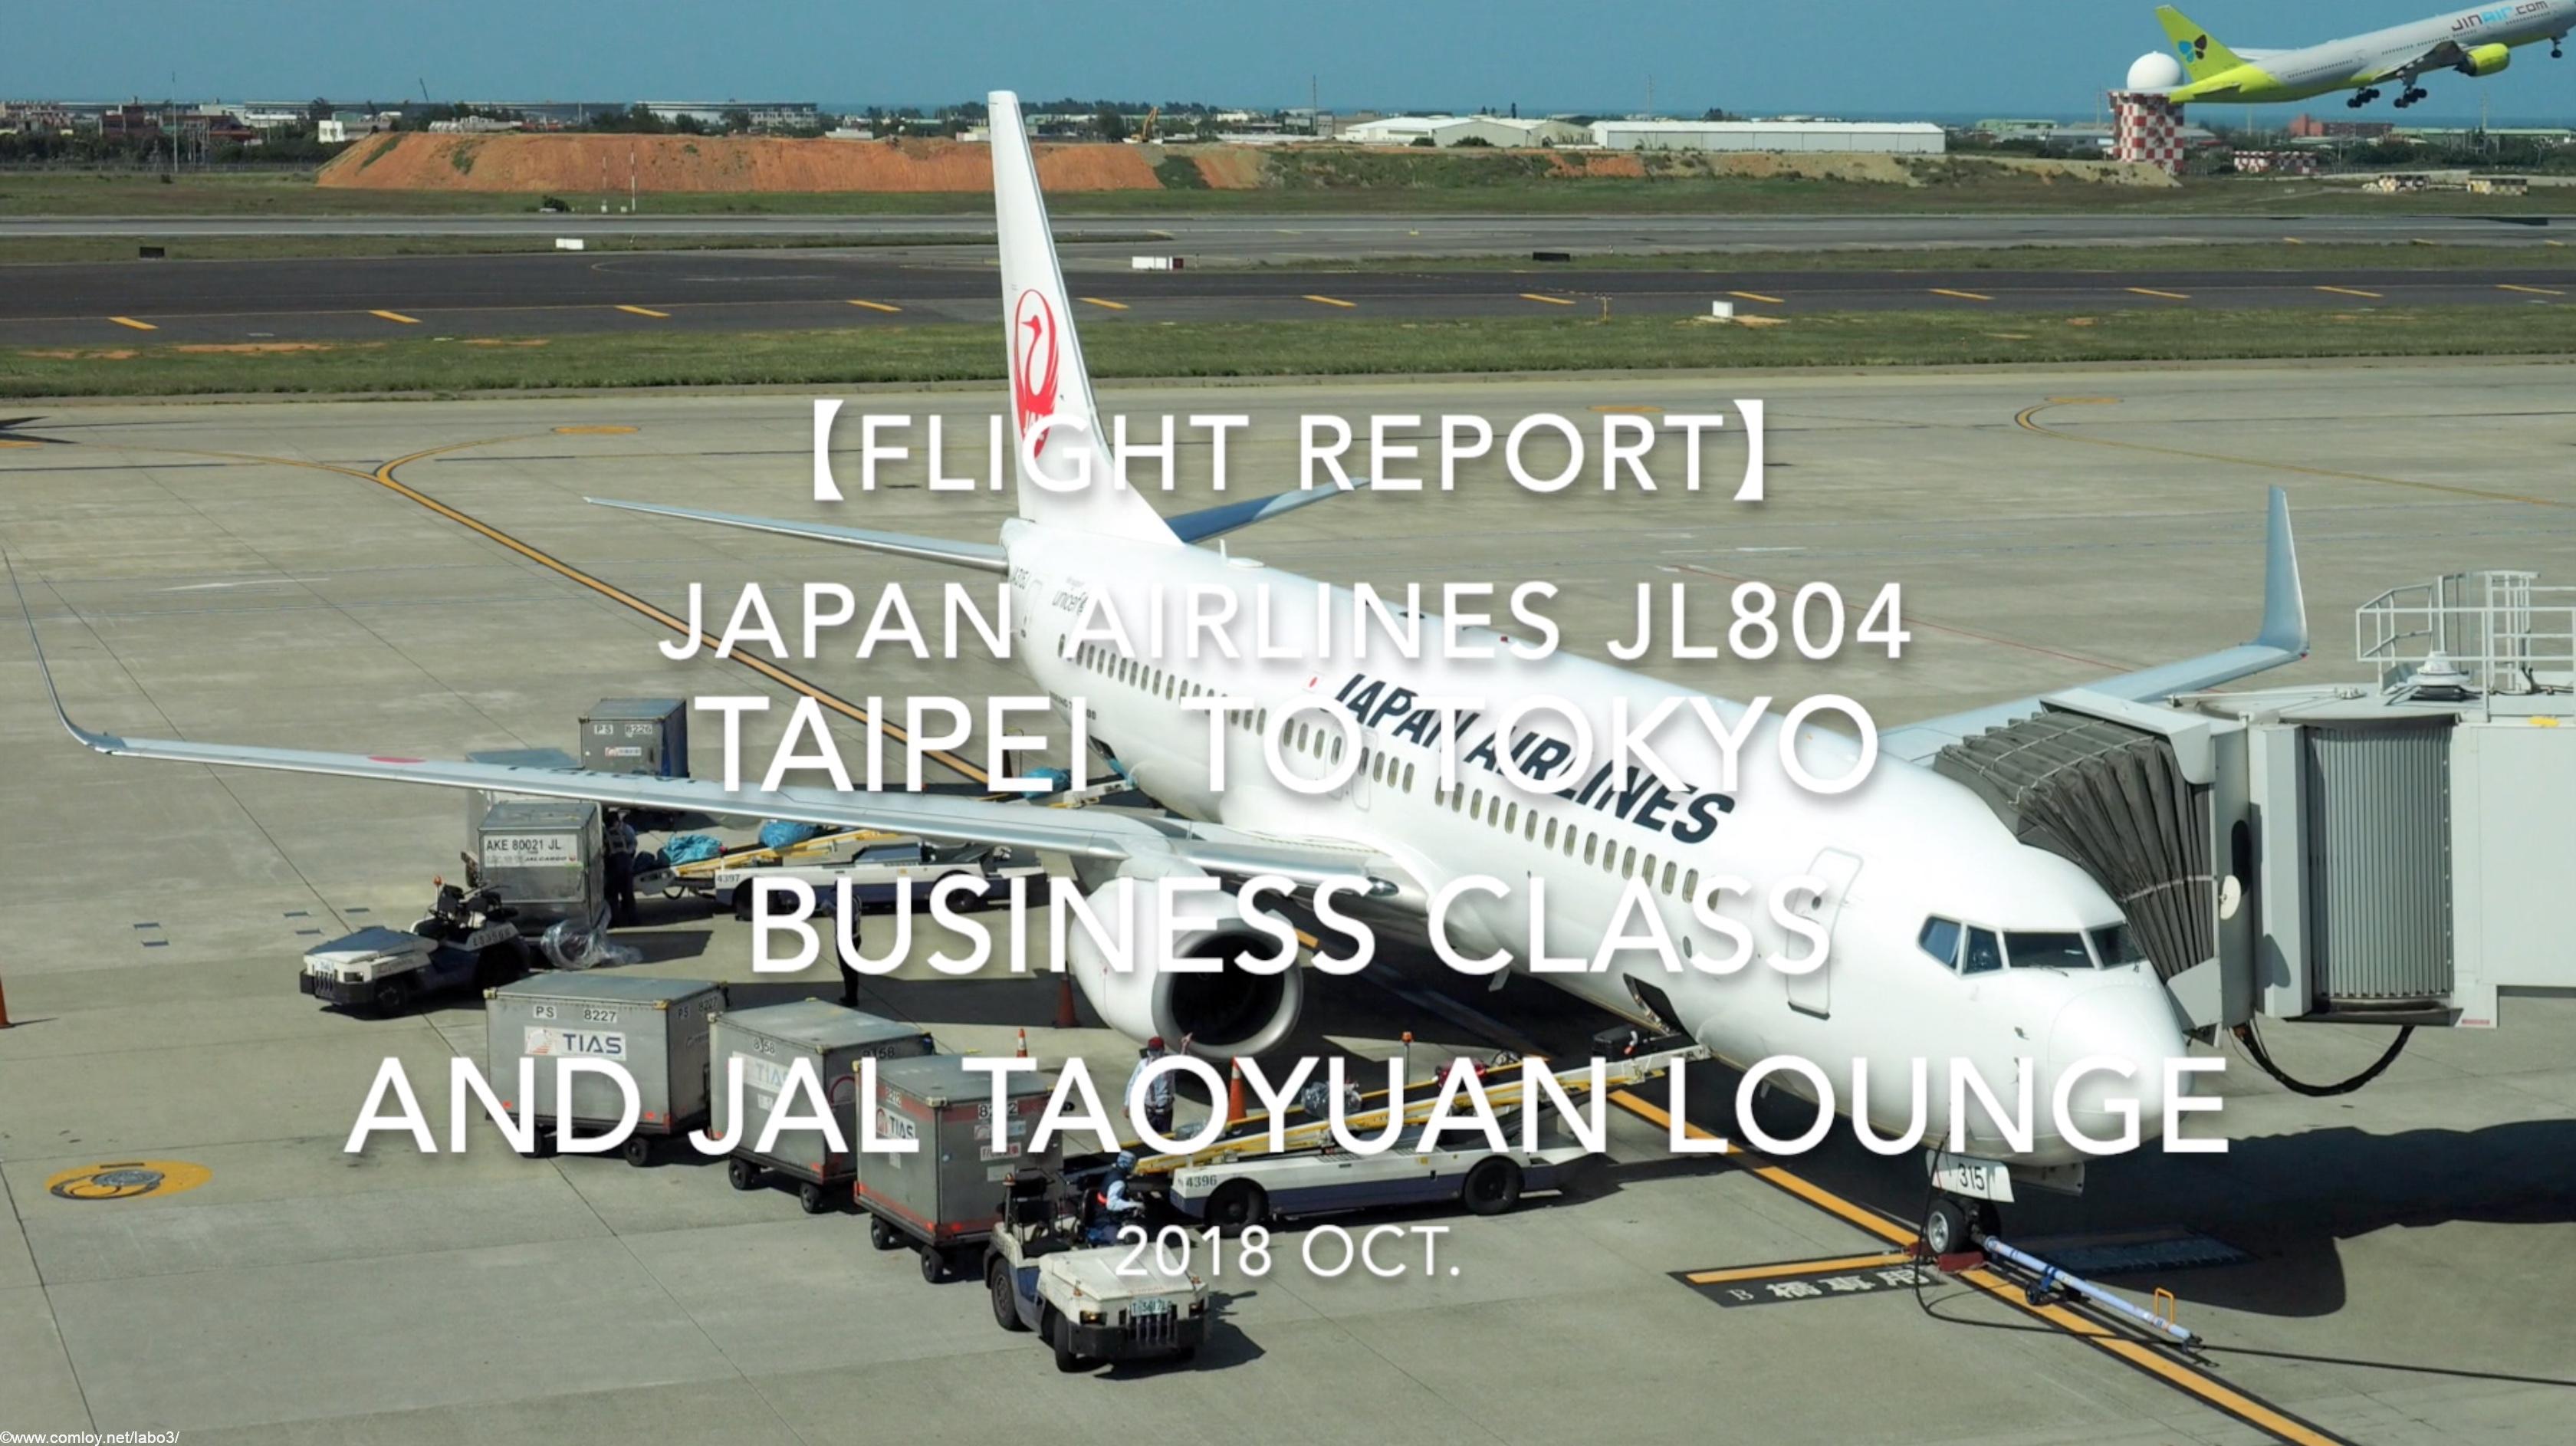 【Flight Report】 JAPAN AIRLINES JL804 TAIPEI TAOYUAN TO TOKYO NARITA BUSINESS CLASS and JAL TAOYUAN LOUNGE 2018 OCT 日本航空 台北（桃園） - 成田 搭乗記